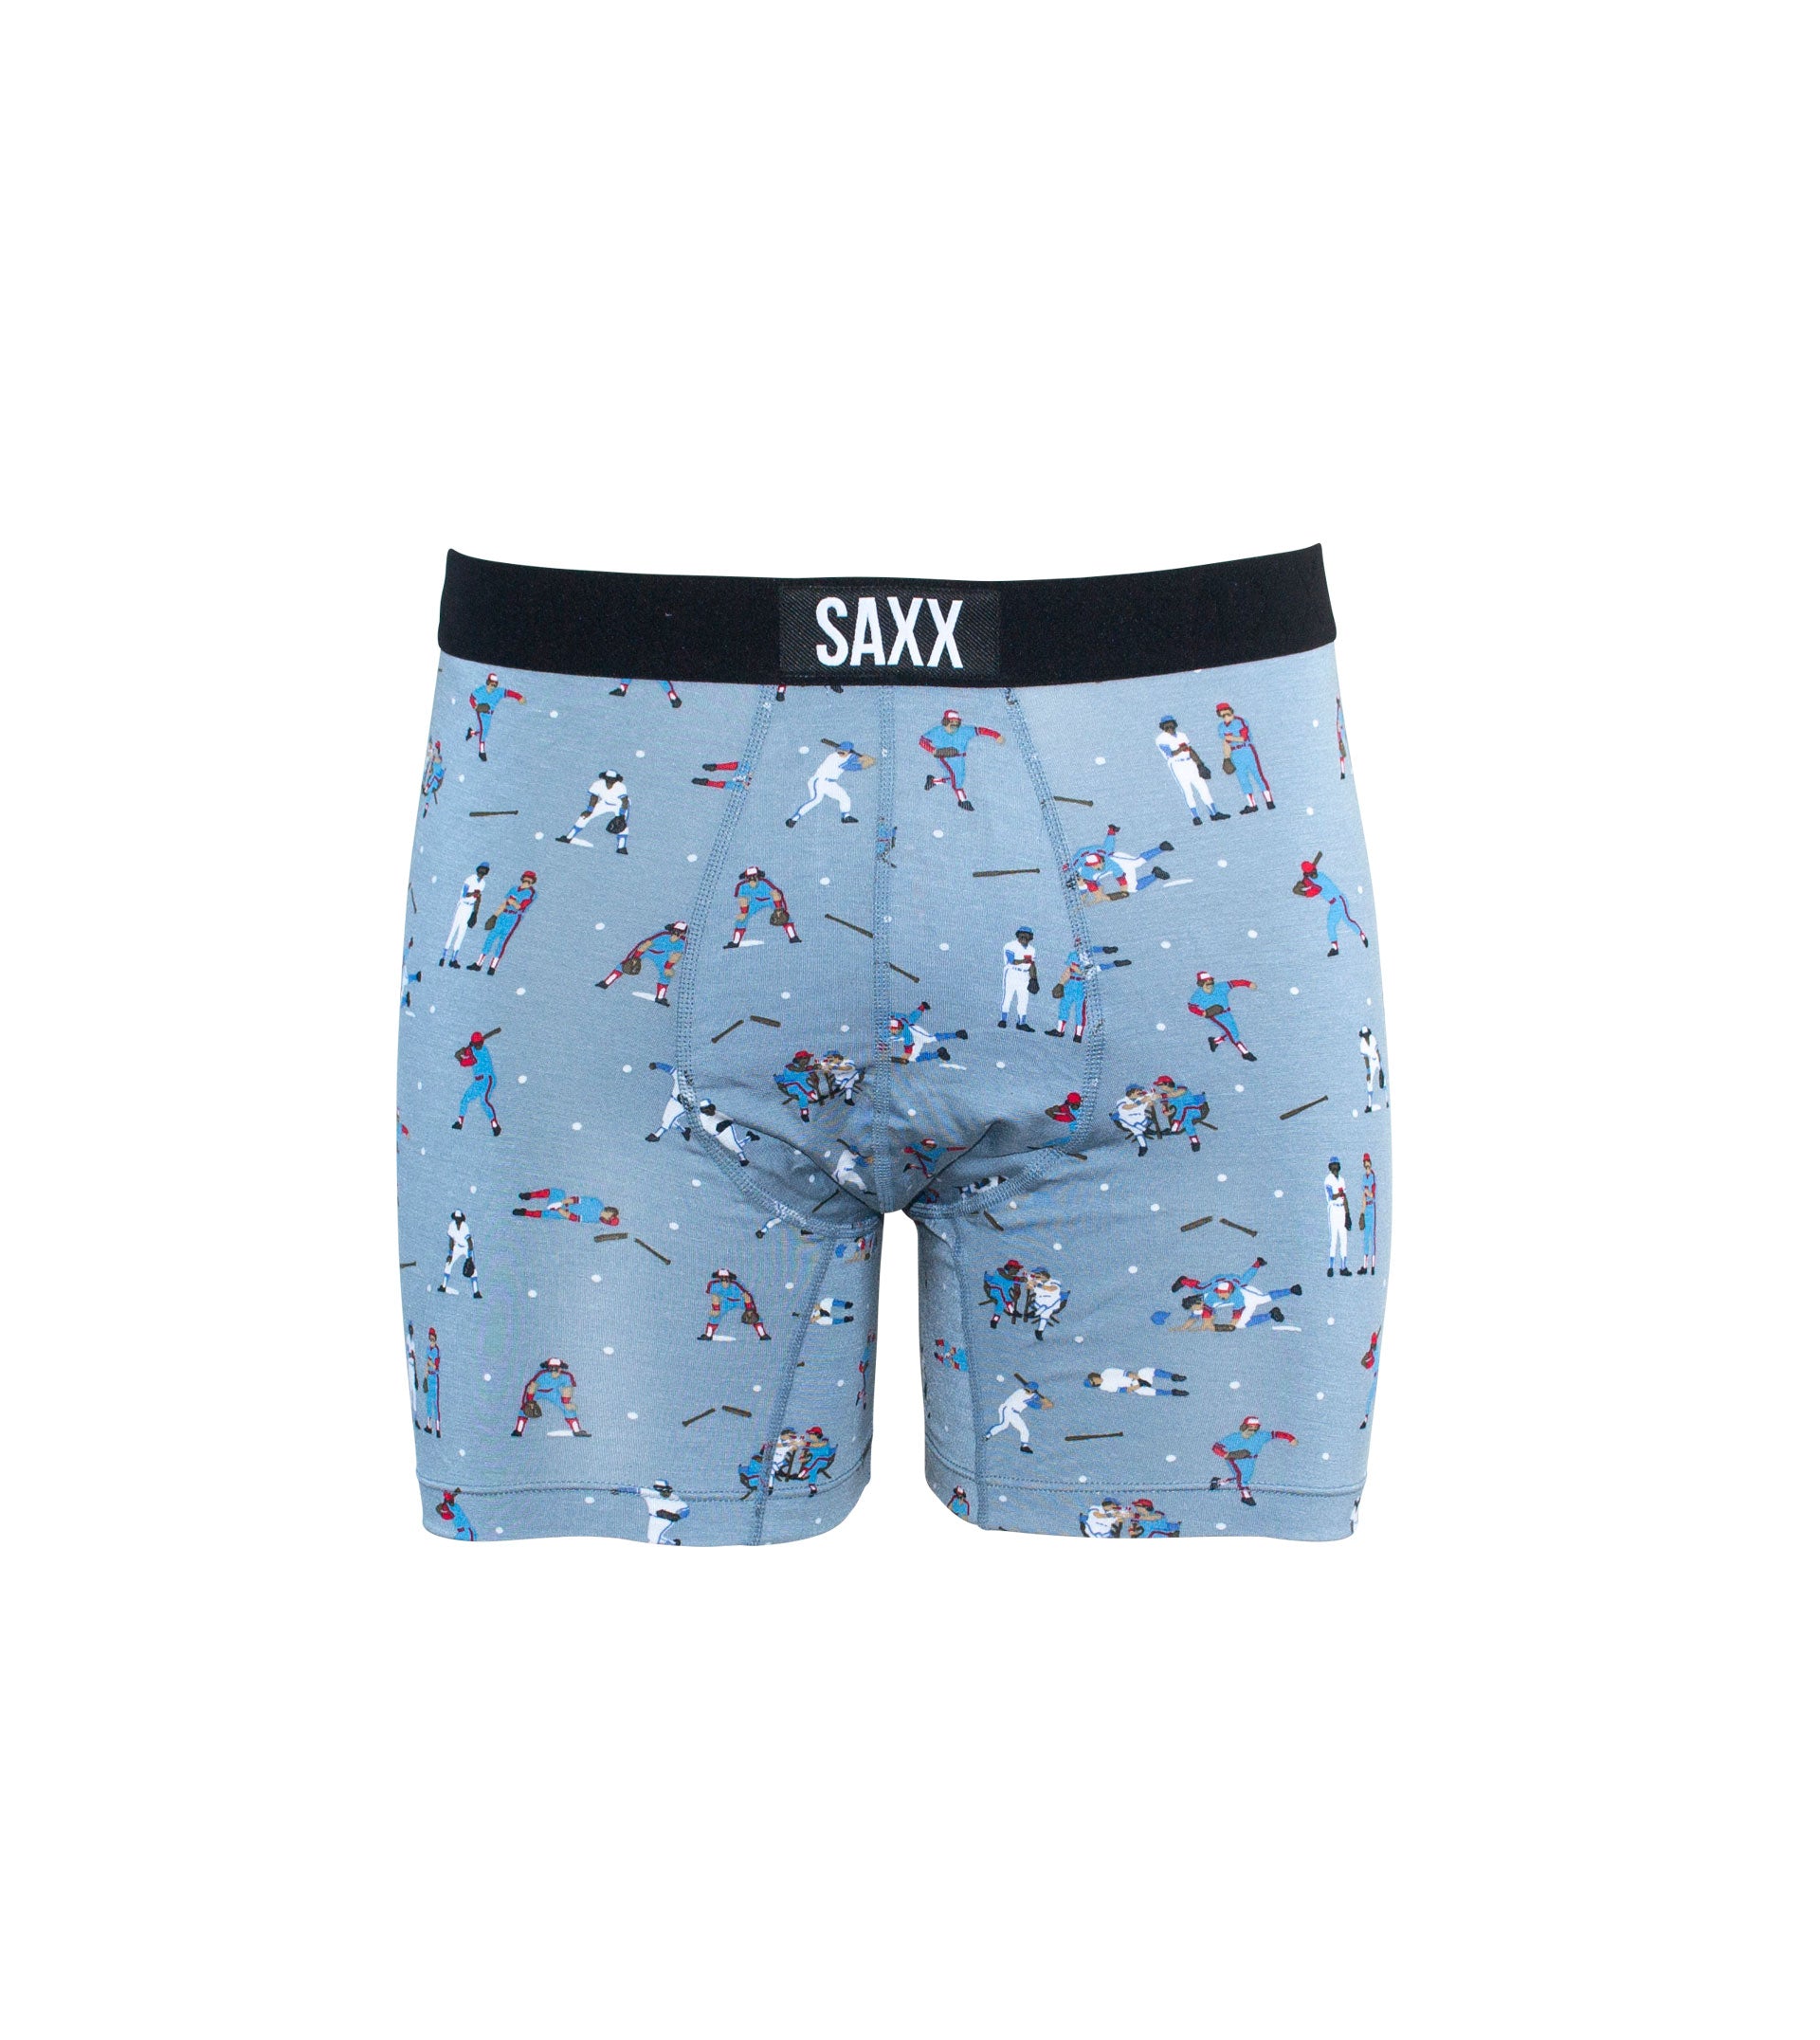 New SAXX Men's XL VIBE Boxer Brief Underwear Slim Fit Grey/Black